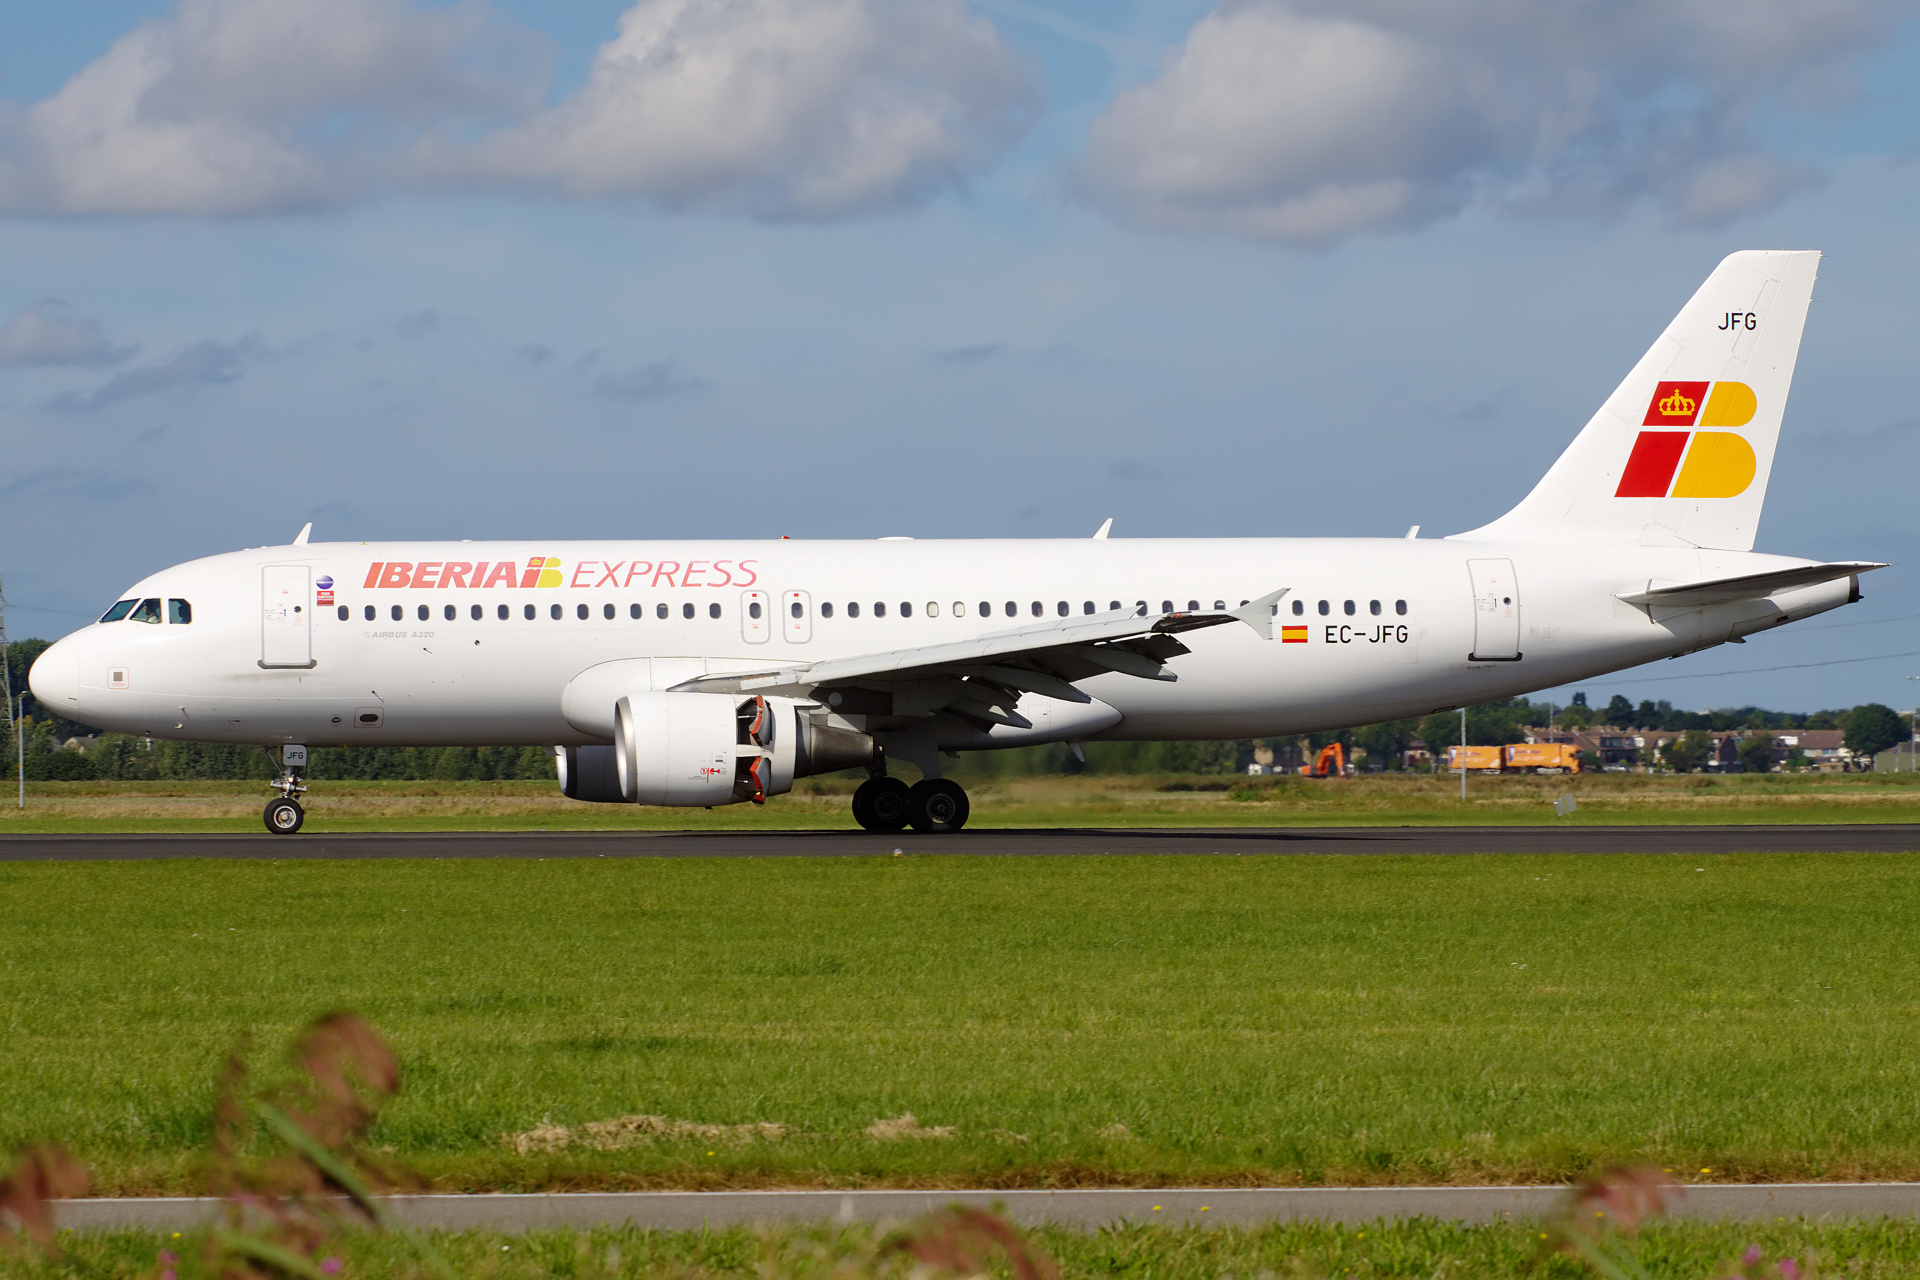 EC-JFG, Iberia Express (Aircraft » Schiphol Spotting » Airbus A320-200)